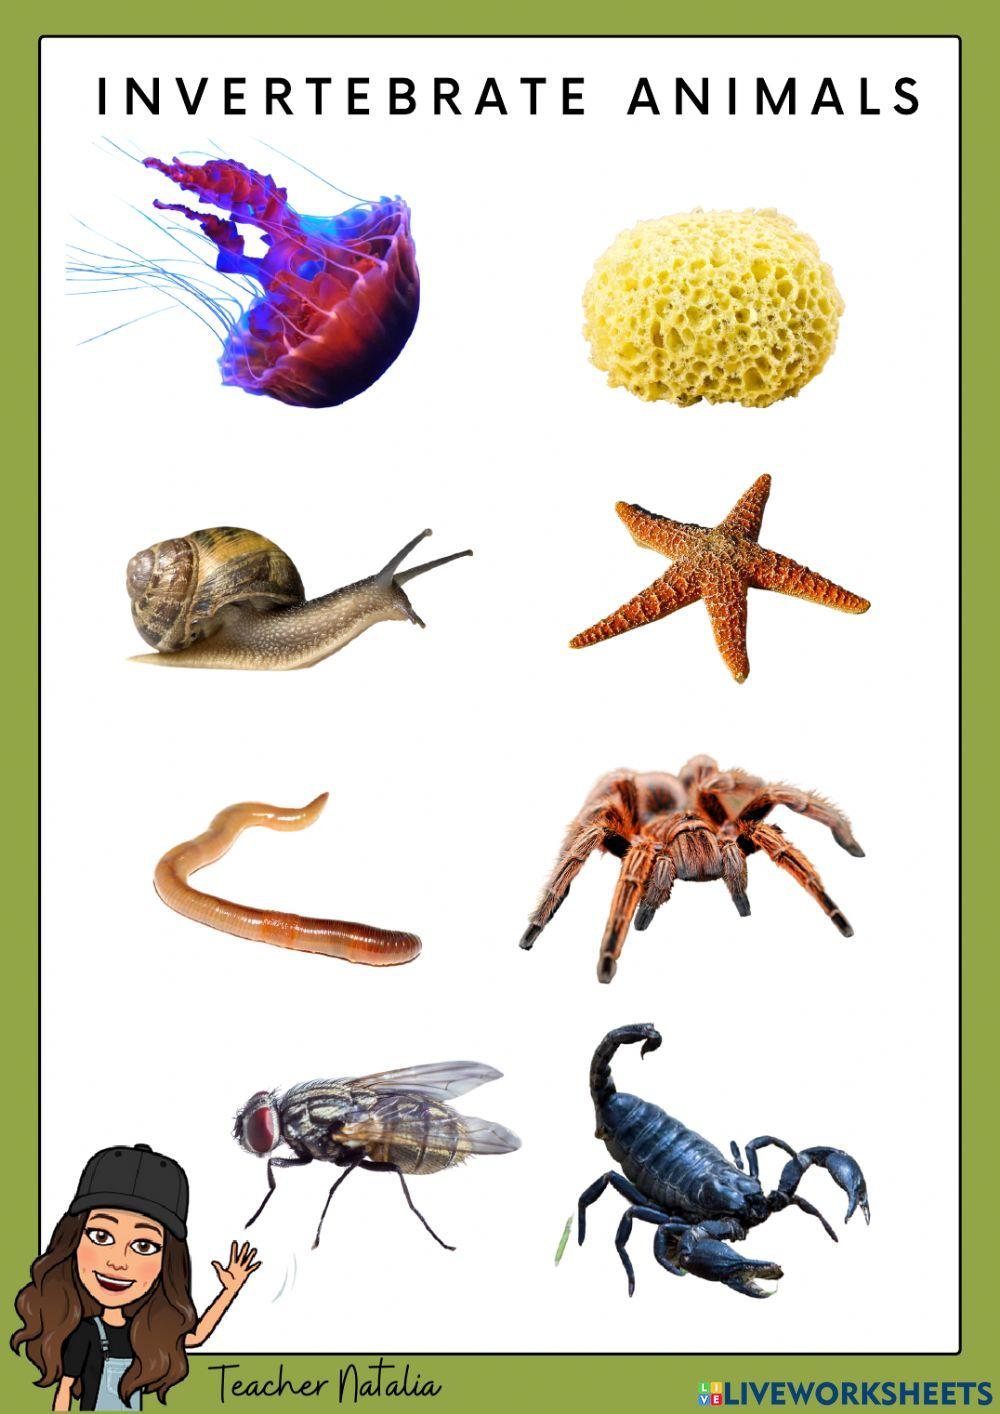 Types of invertebrates